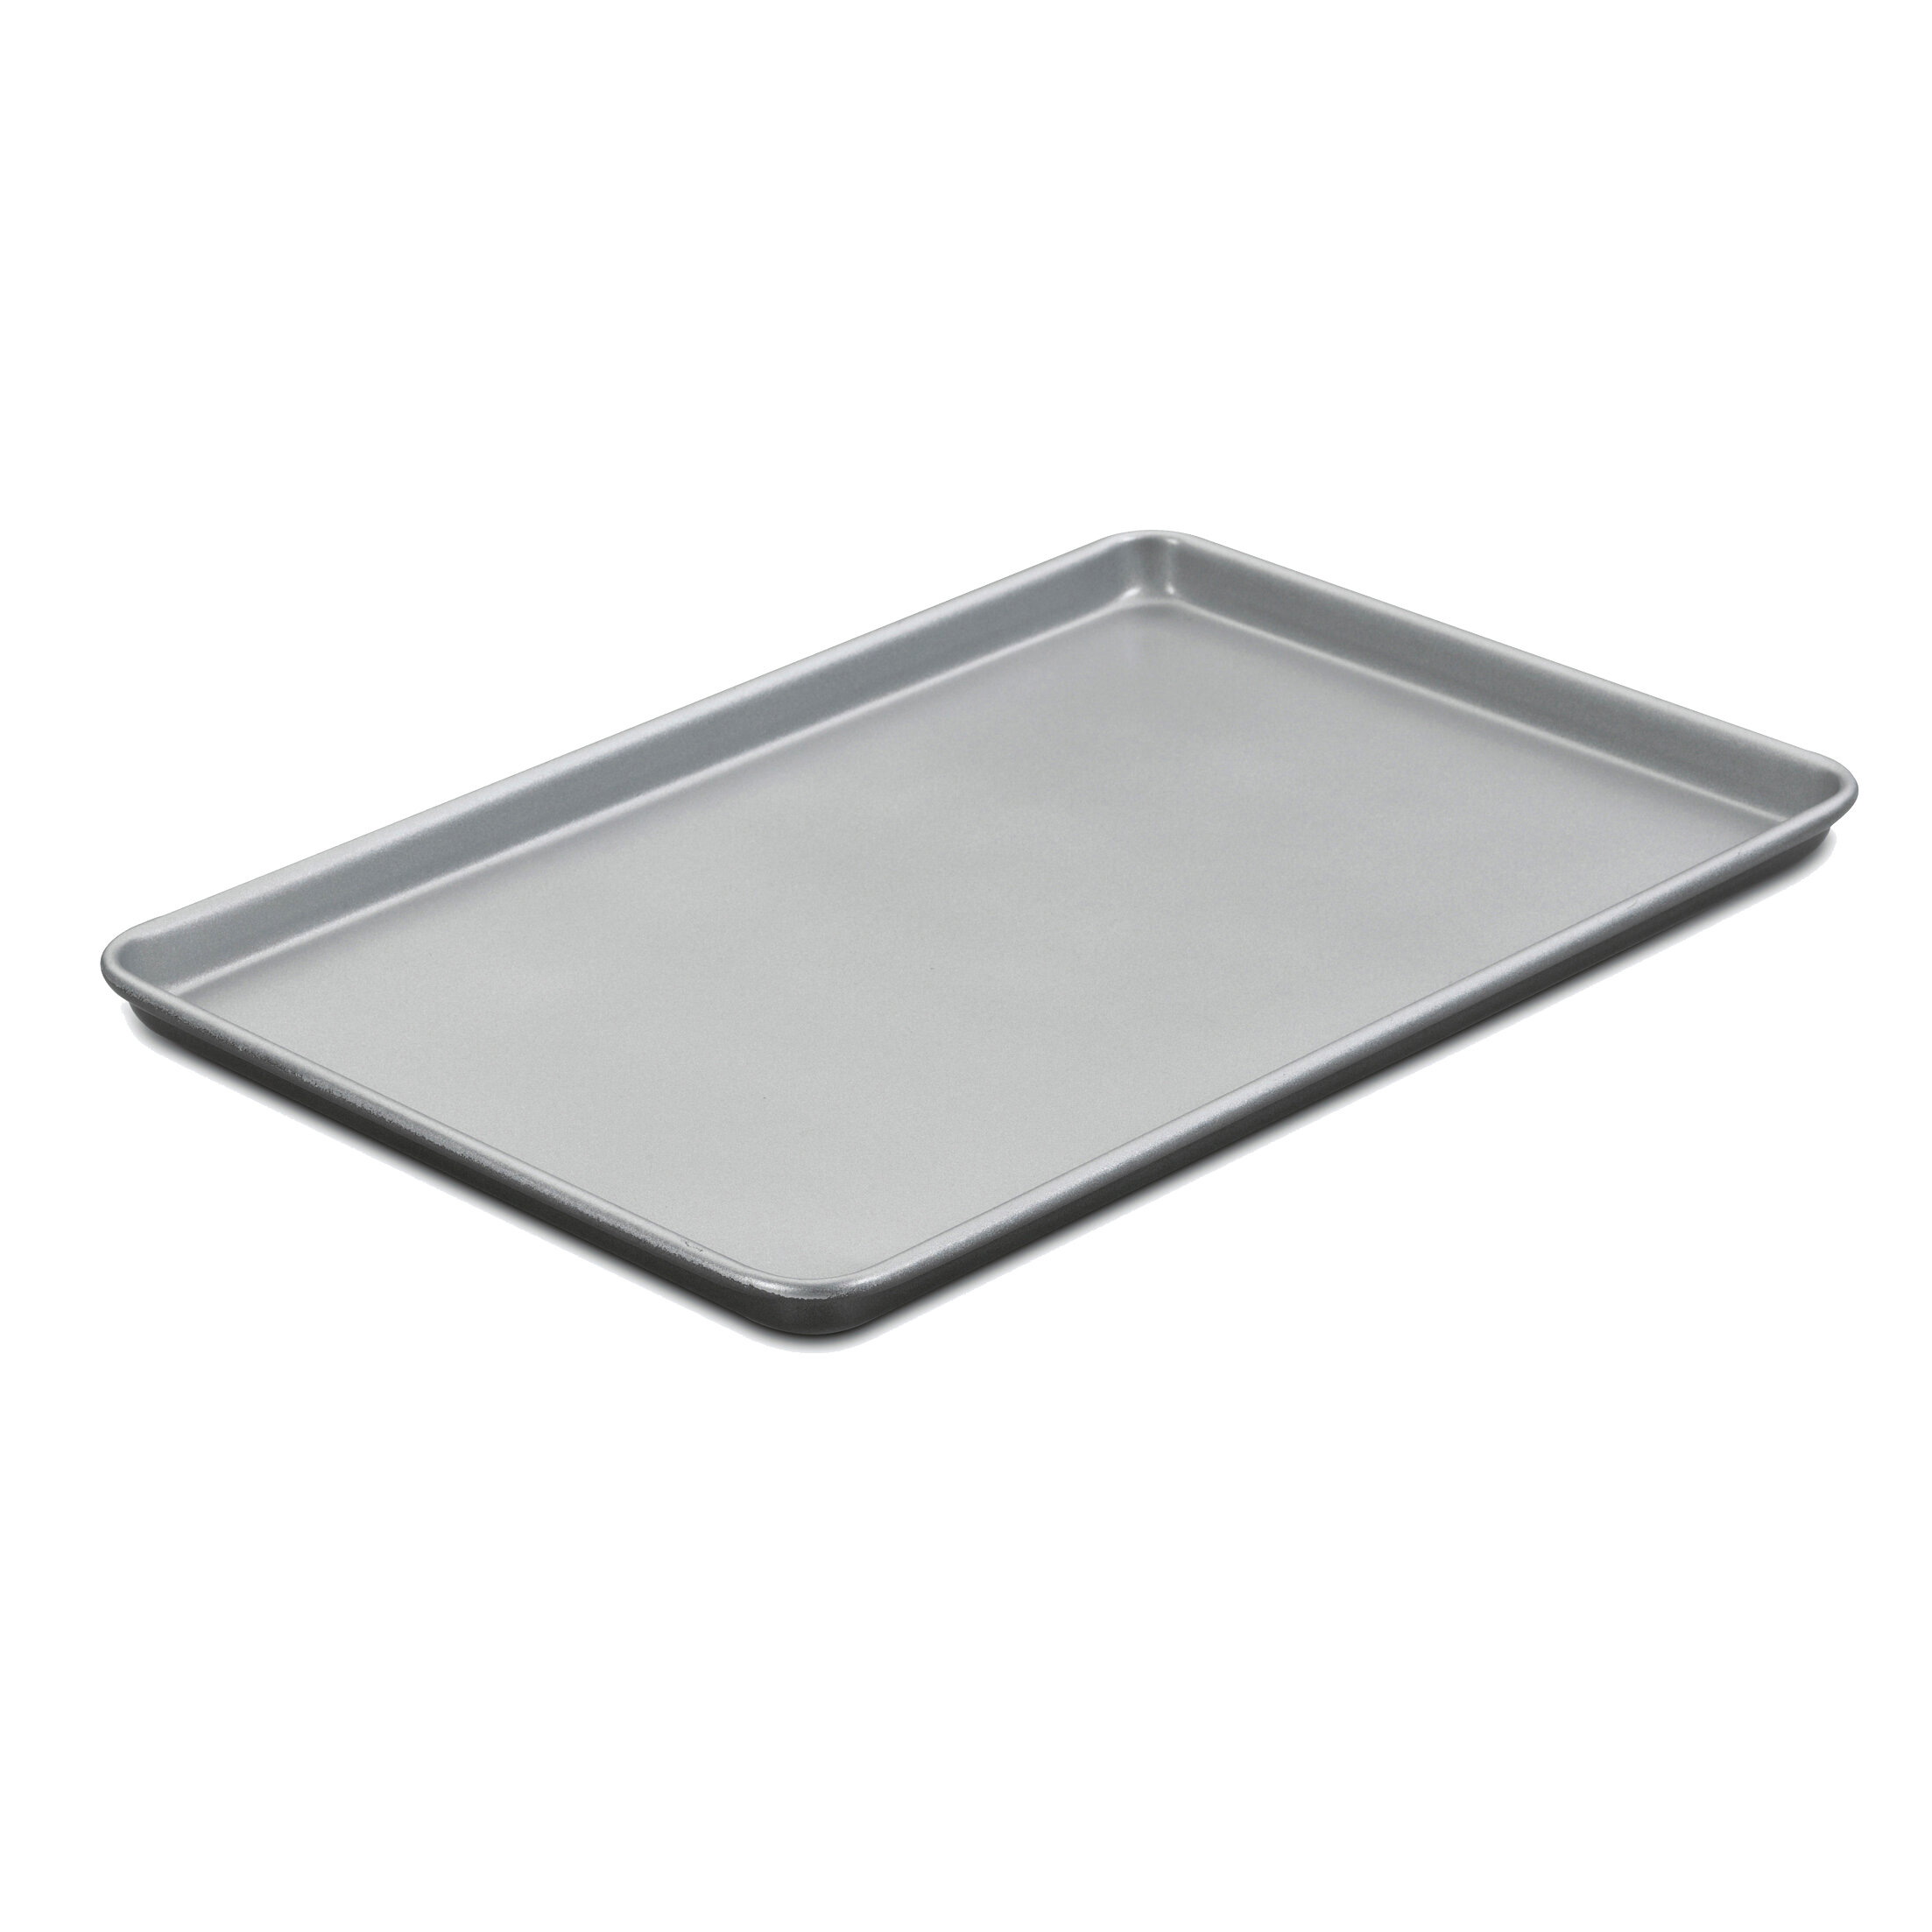 Fox Run Stainless Steel Cookie Sheet Baking Pan, 14 x 17, Silver